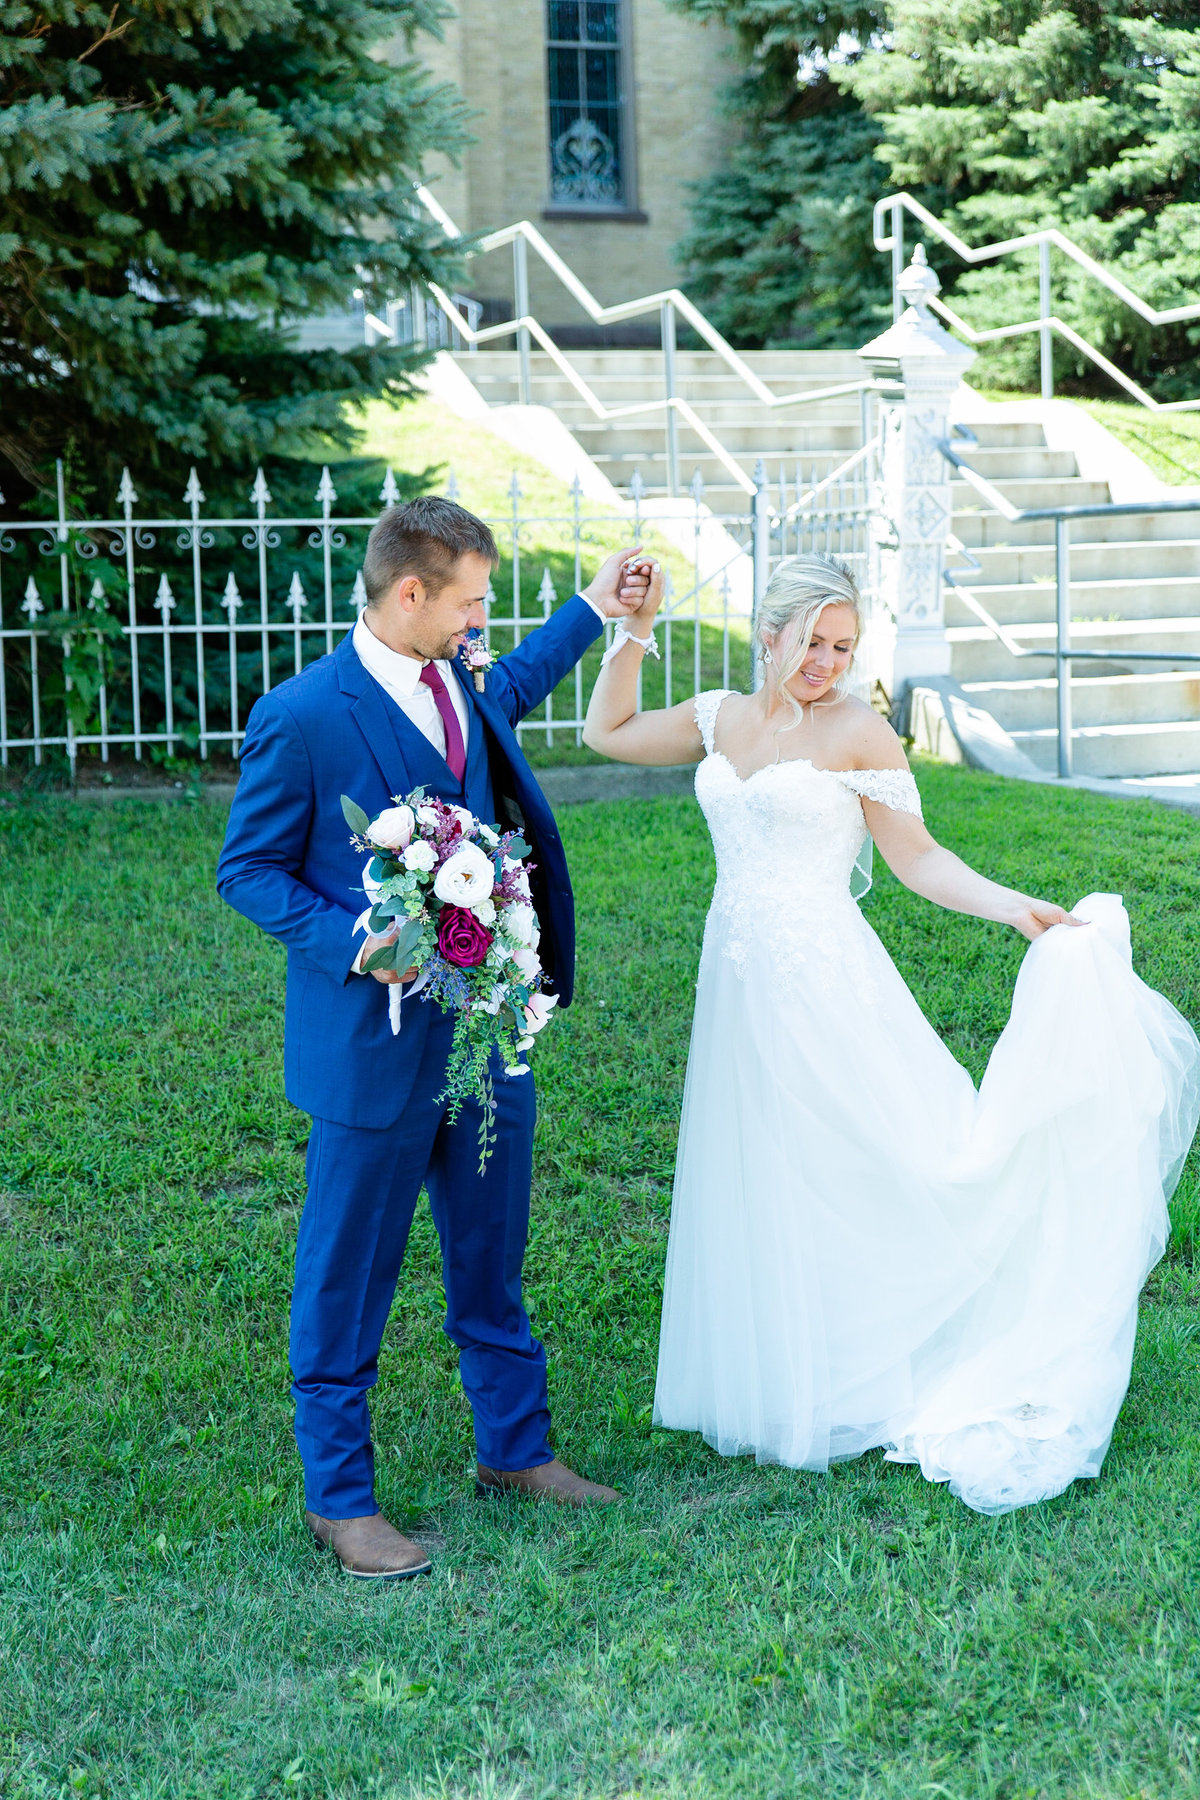 Groom admires bride and her wedding dress